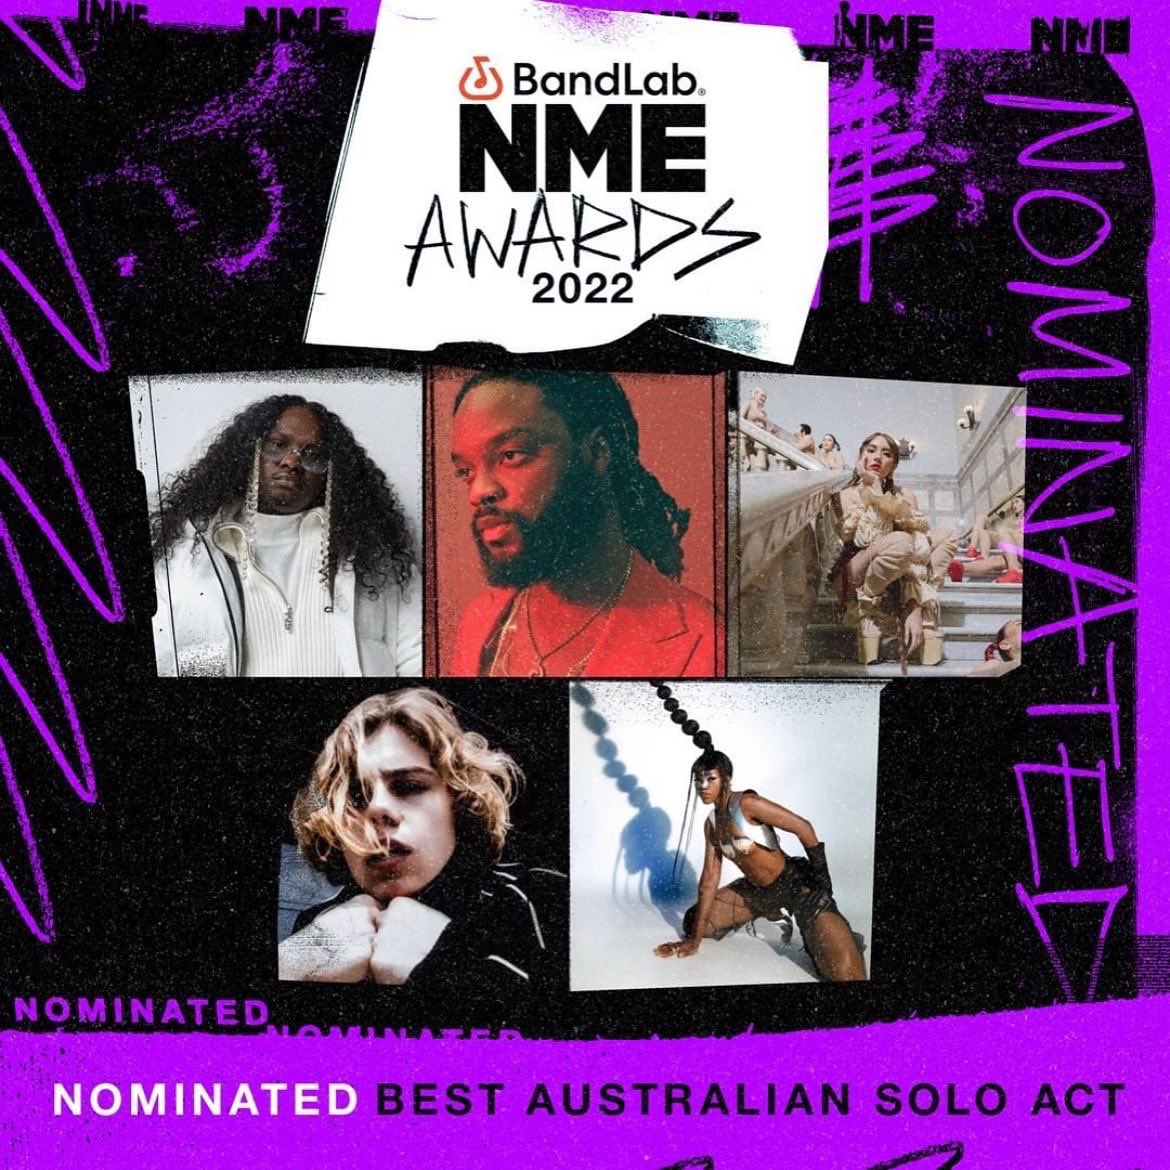 💜😭 NOMINATED IN THE BEST AUSTRALIAN SOLO ACT AWARD ALONGSIDE @bakerboymusic @genesisowusu @thekidlaroi & @TKAYMAIDZA ⚡️⚡️ Thank you so much NME! #BandLabNMEAwards2022 @nmeaustralia @NME @BandLab